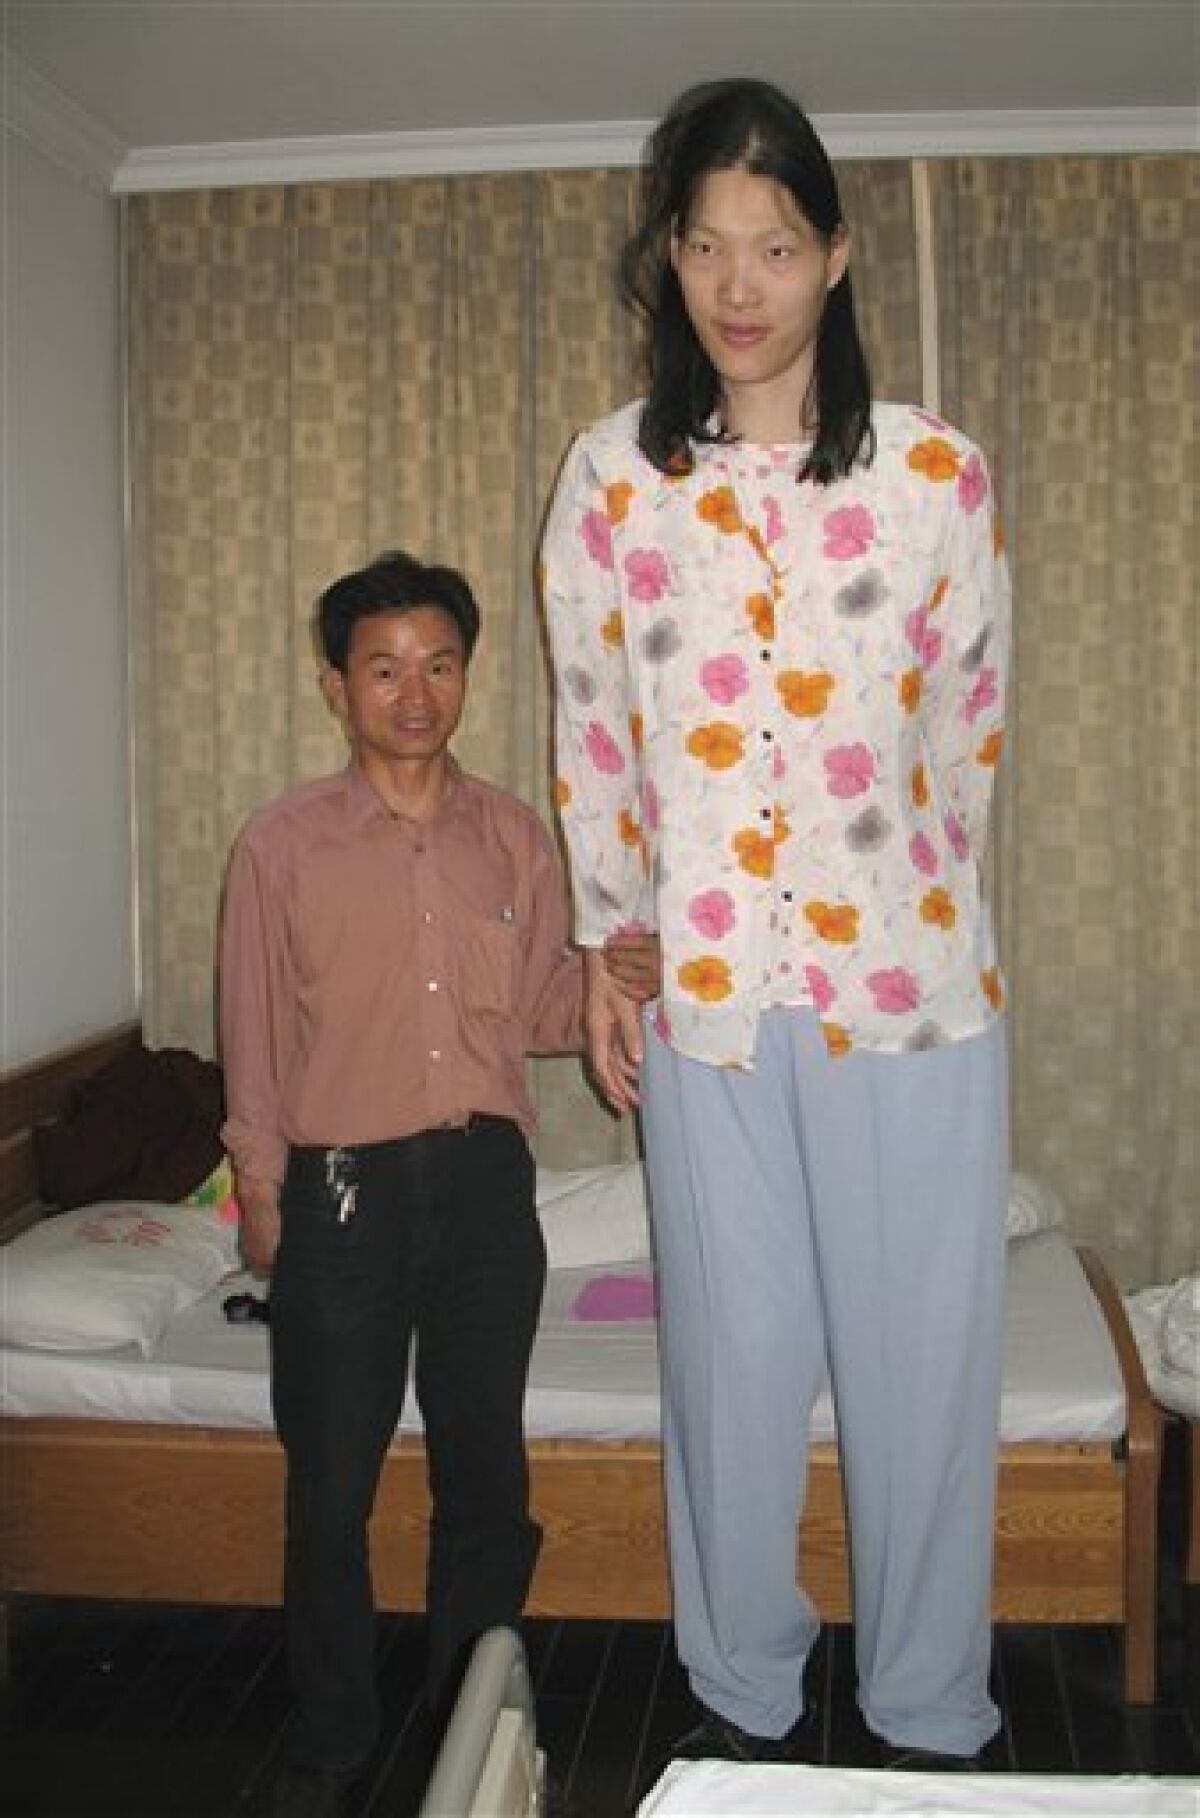 World tallest woman